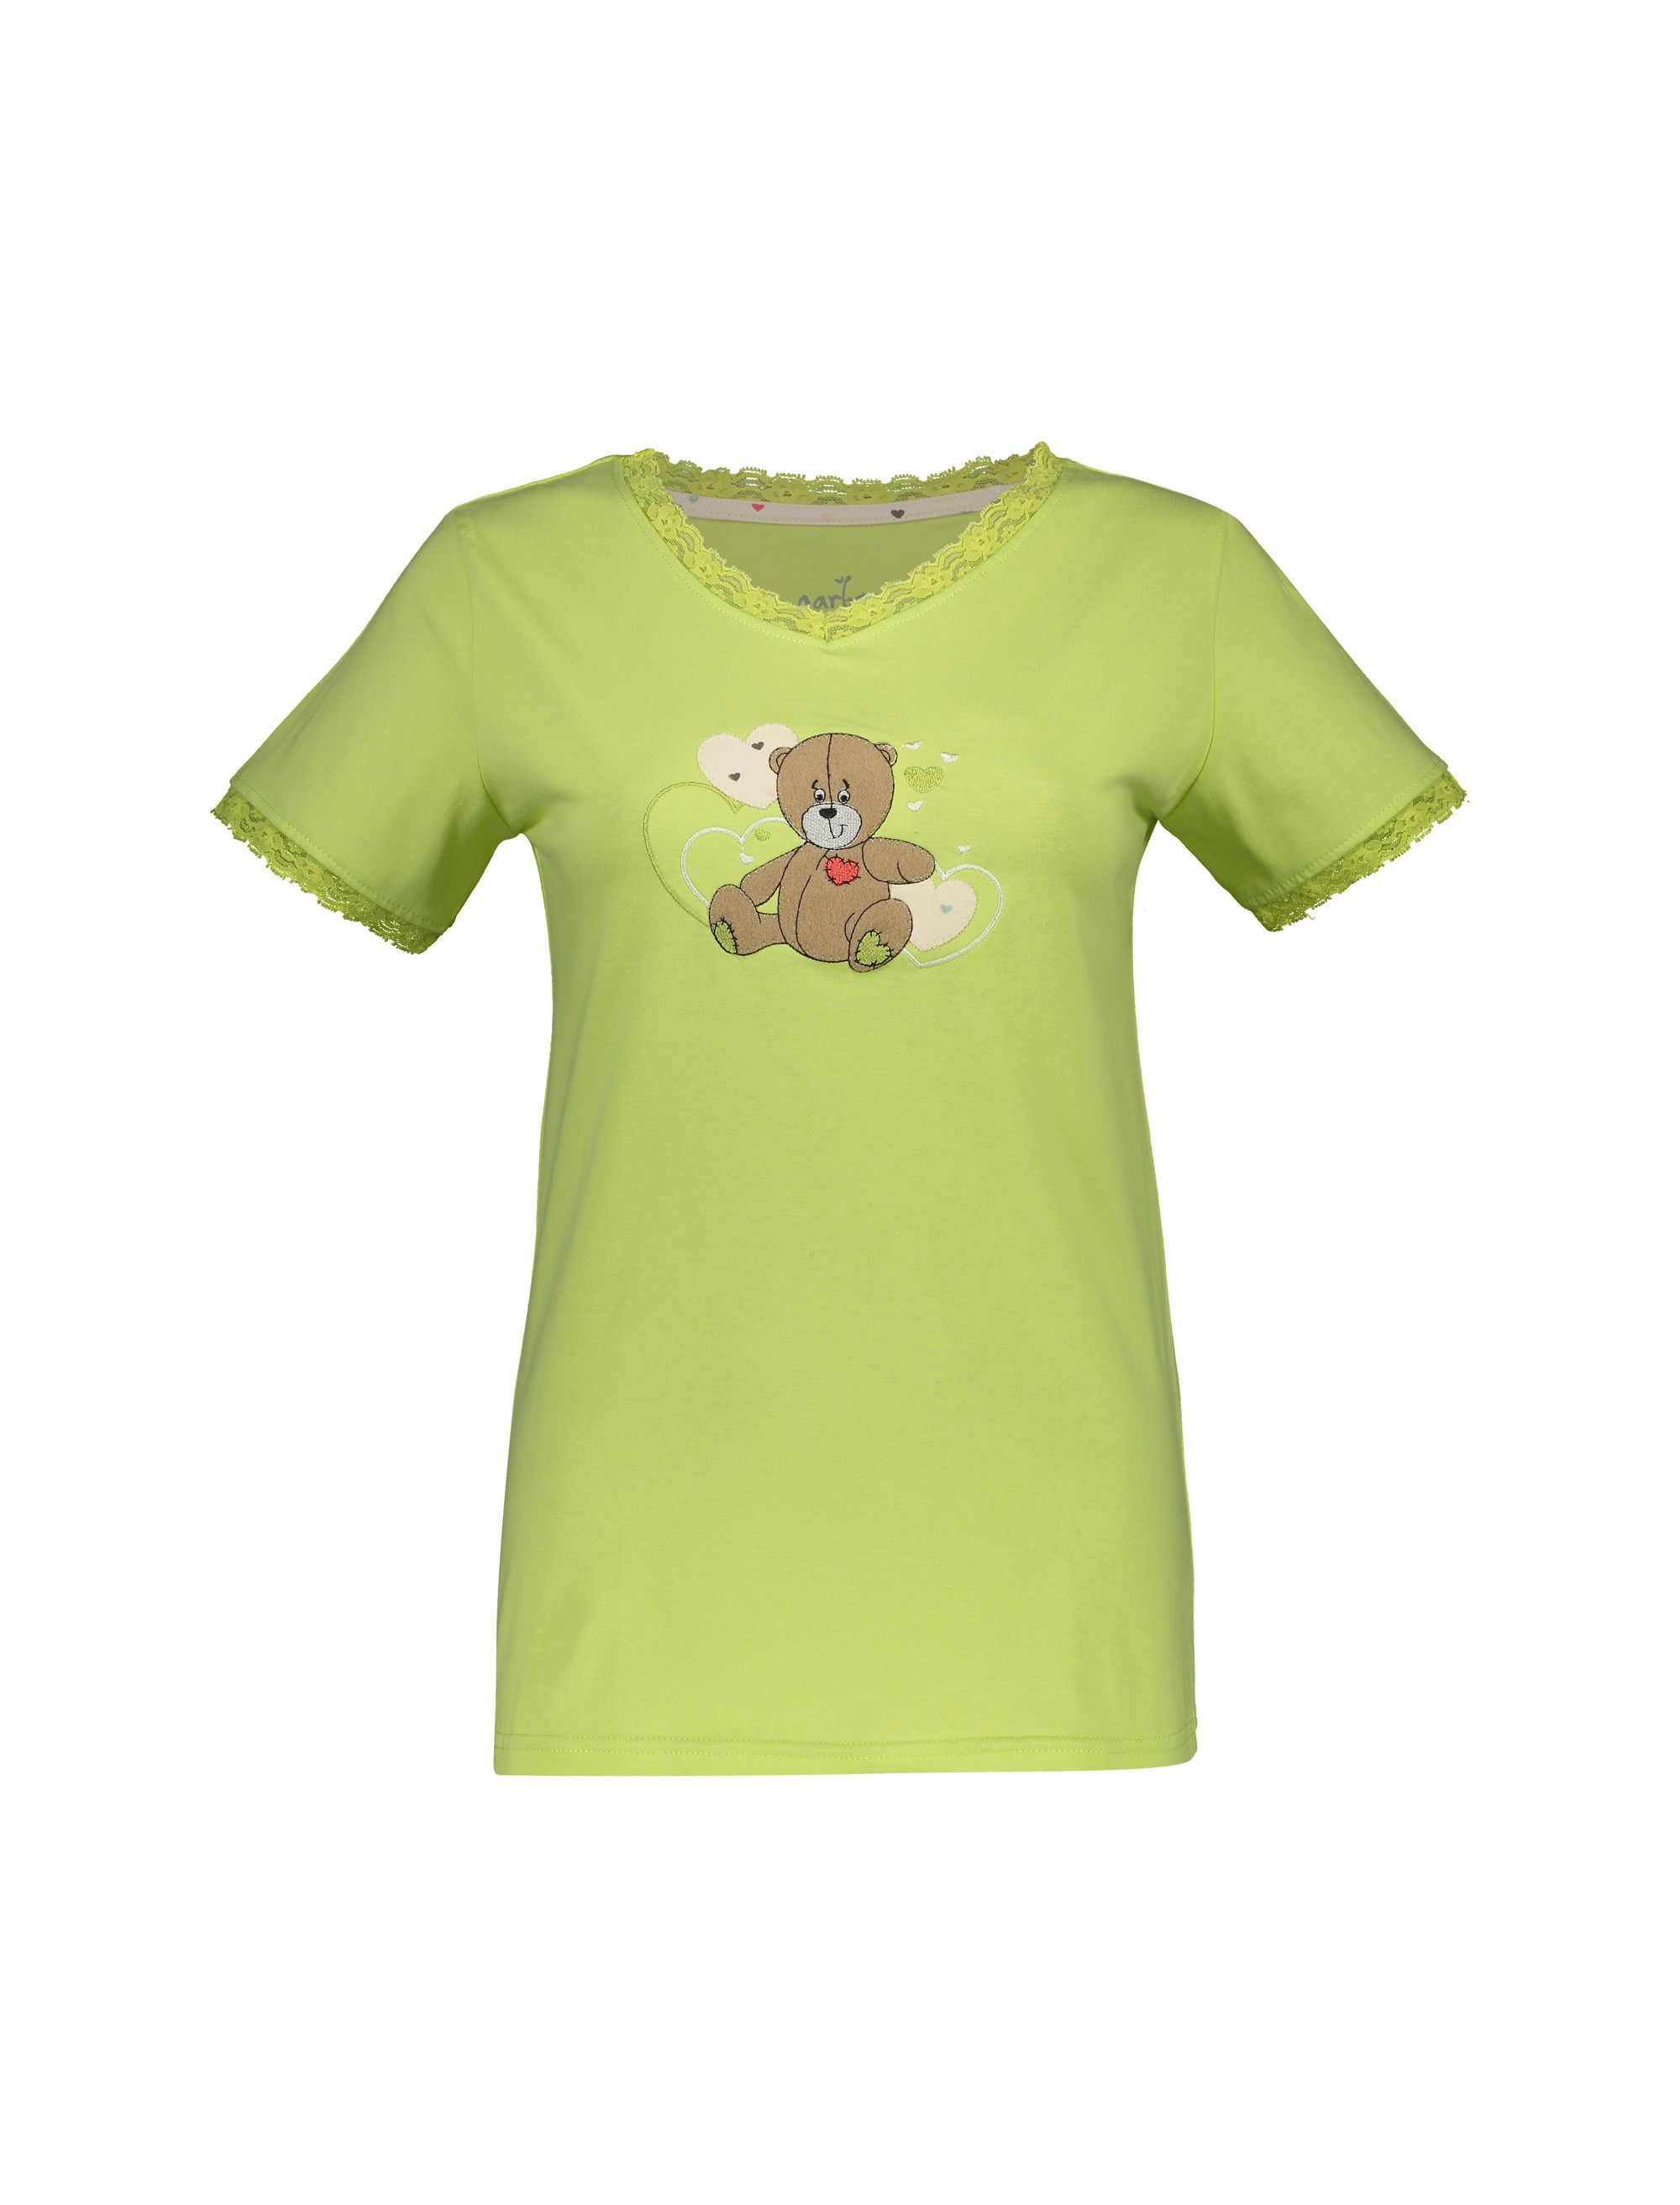 تی شرت و شلوار نخی زنانه خرس مهربان - ناربن - سبز - 2